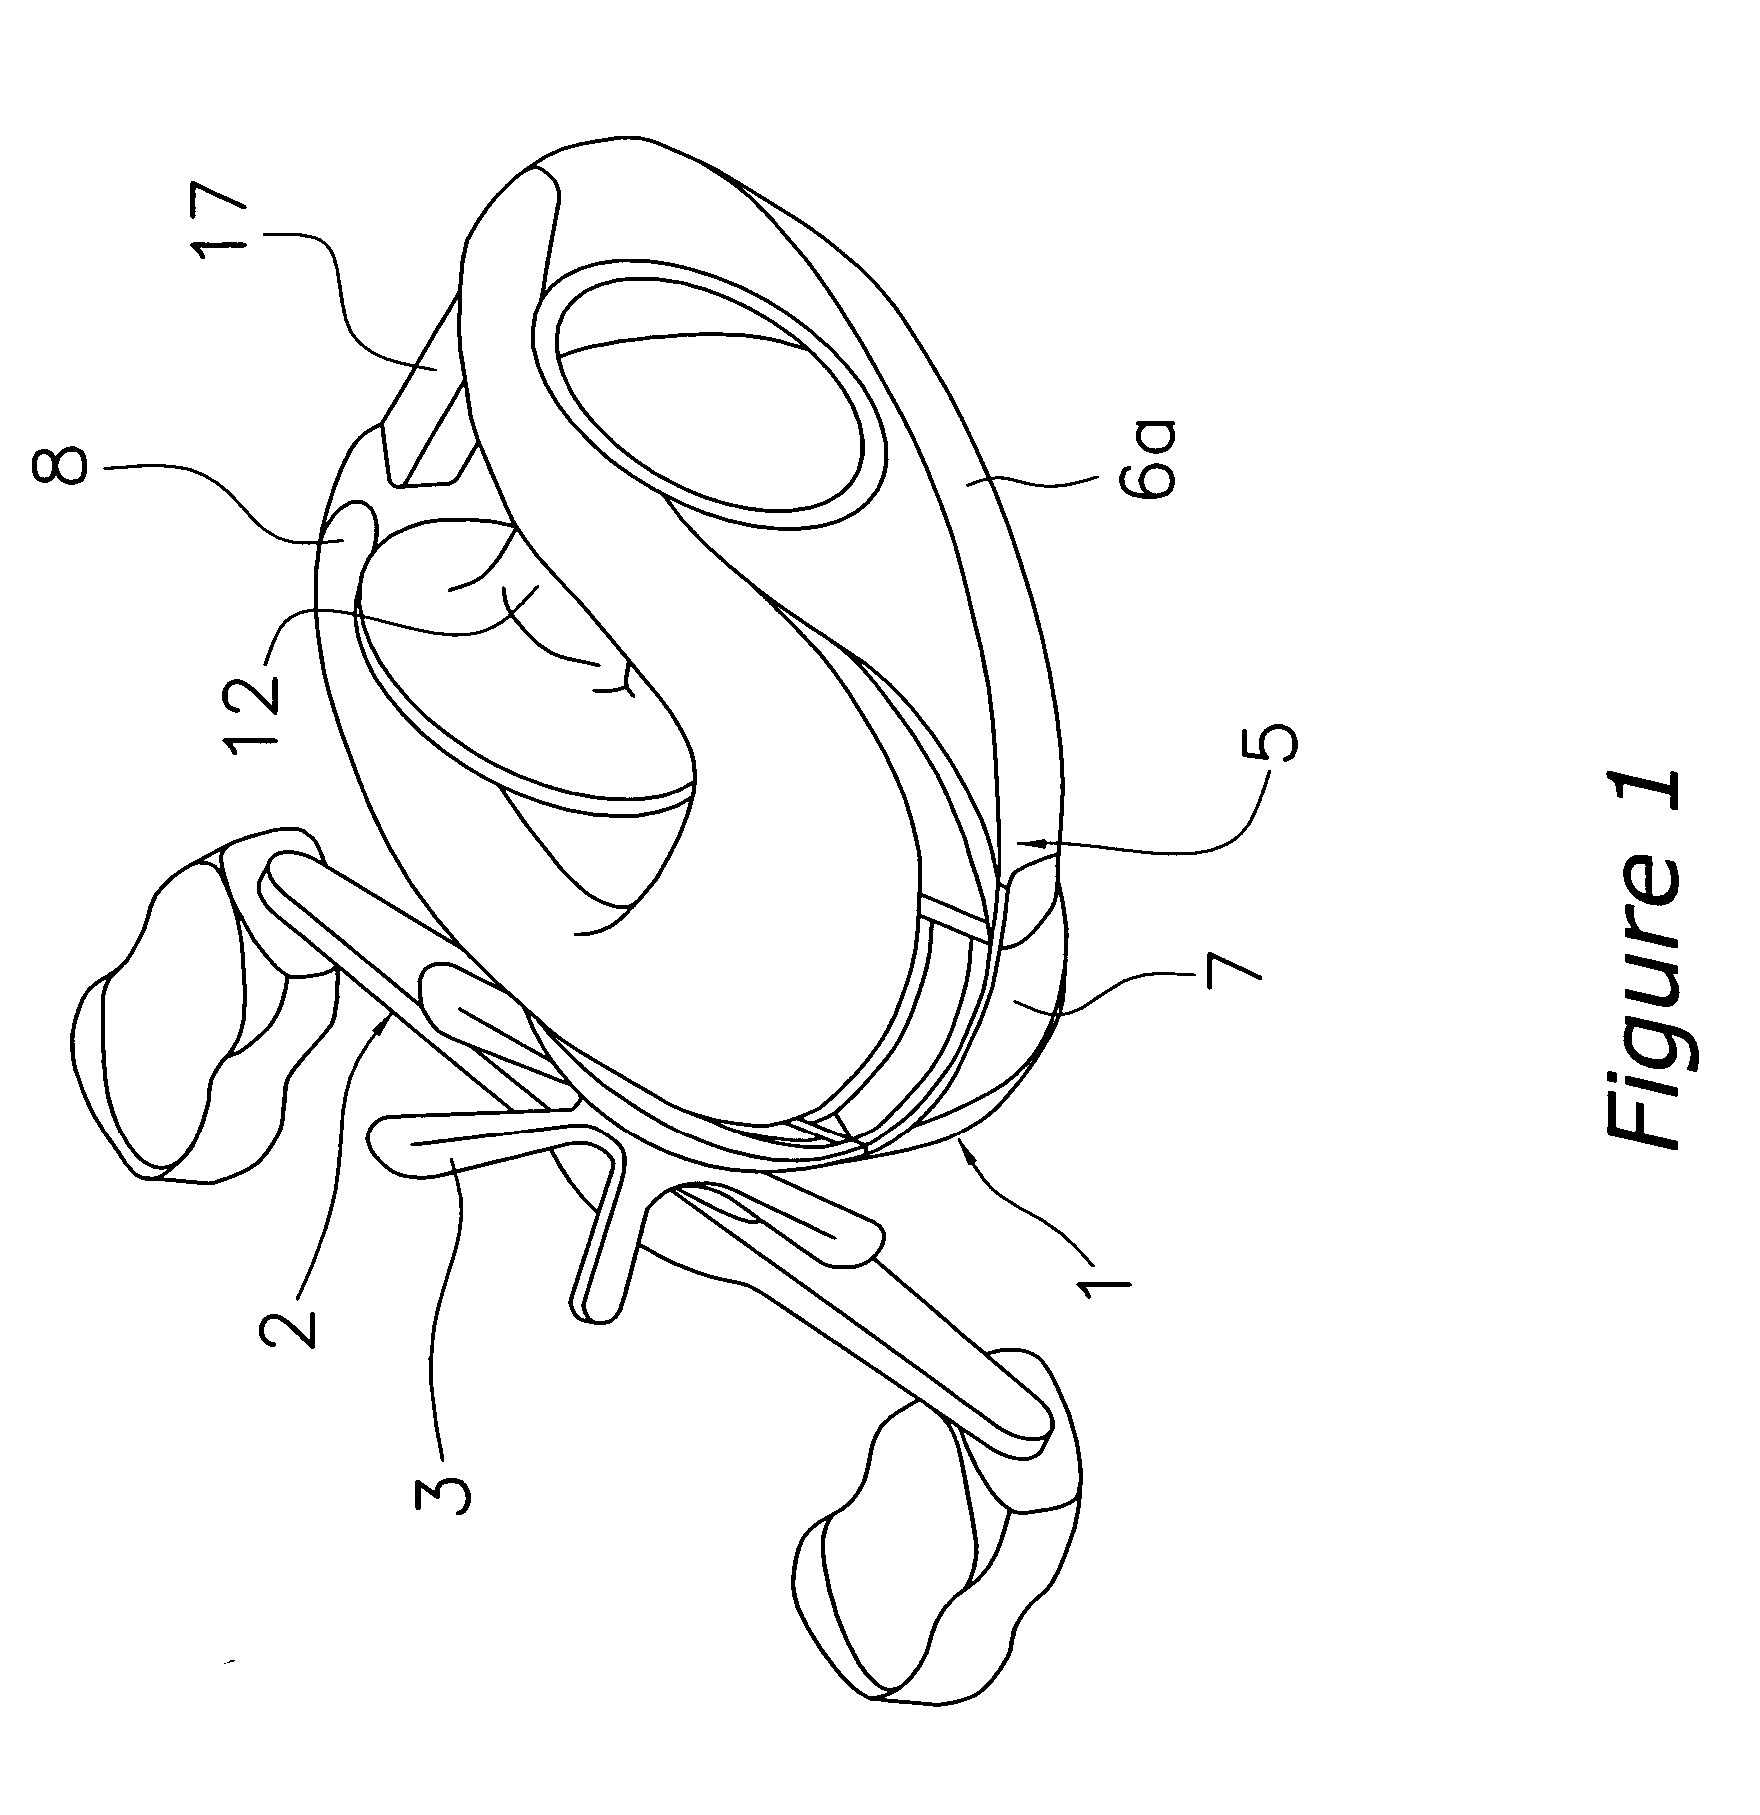 Reel unit for a dual bearing reel